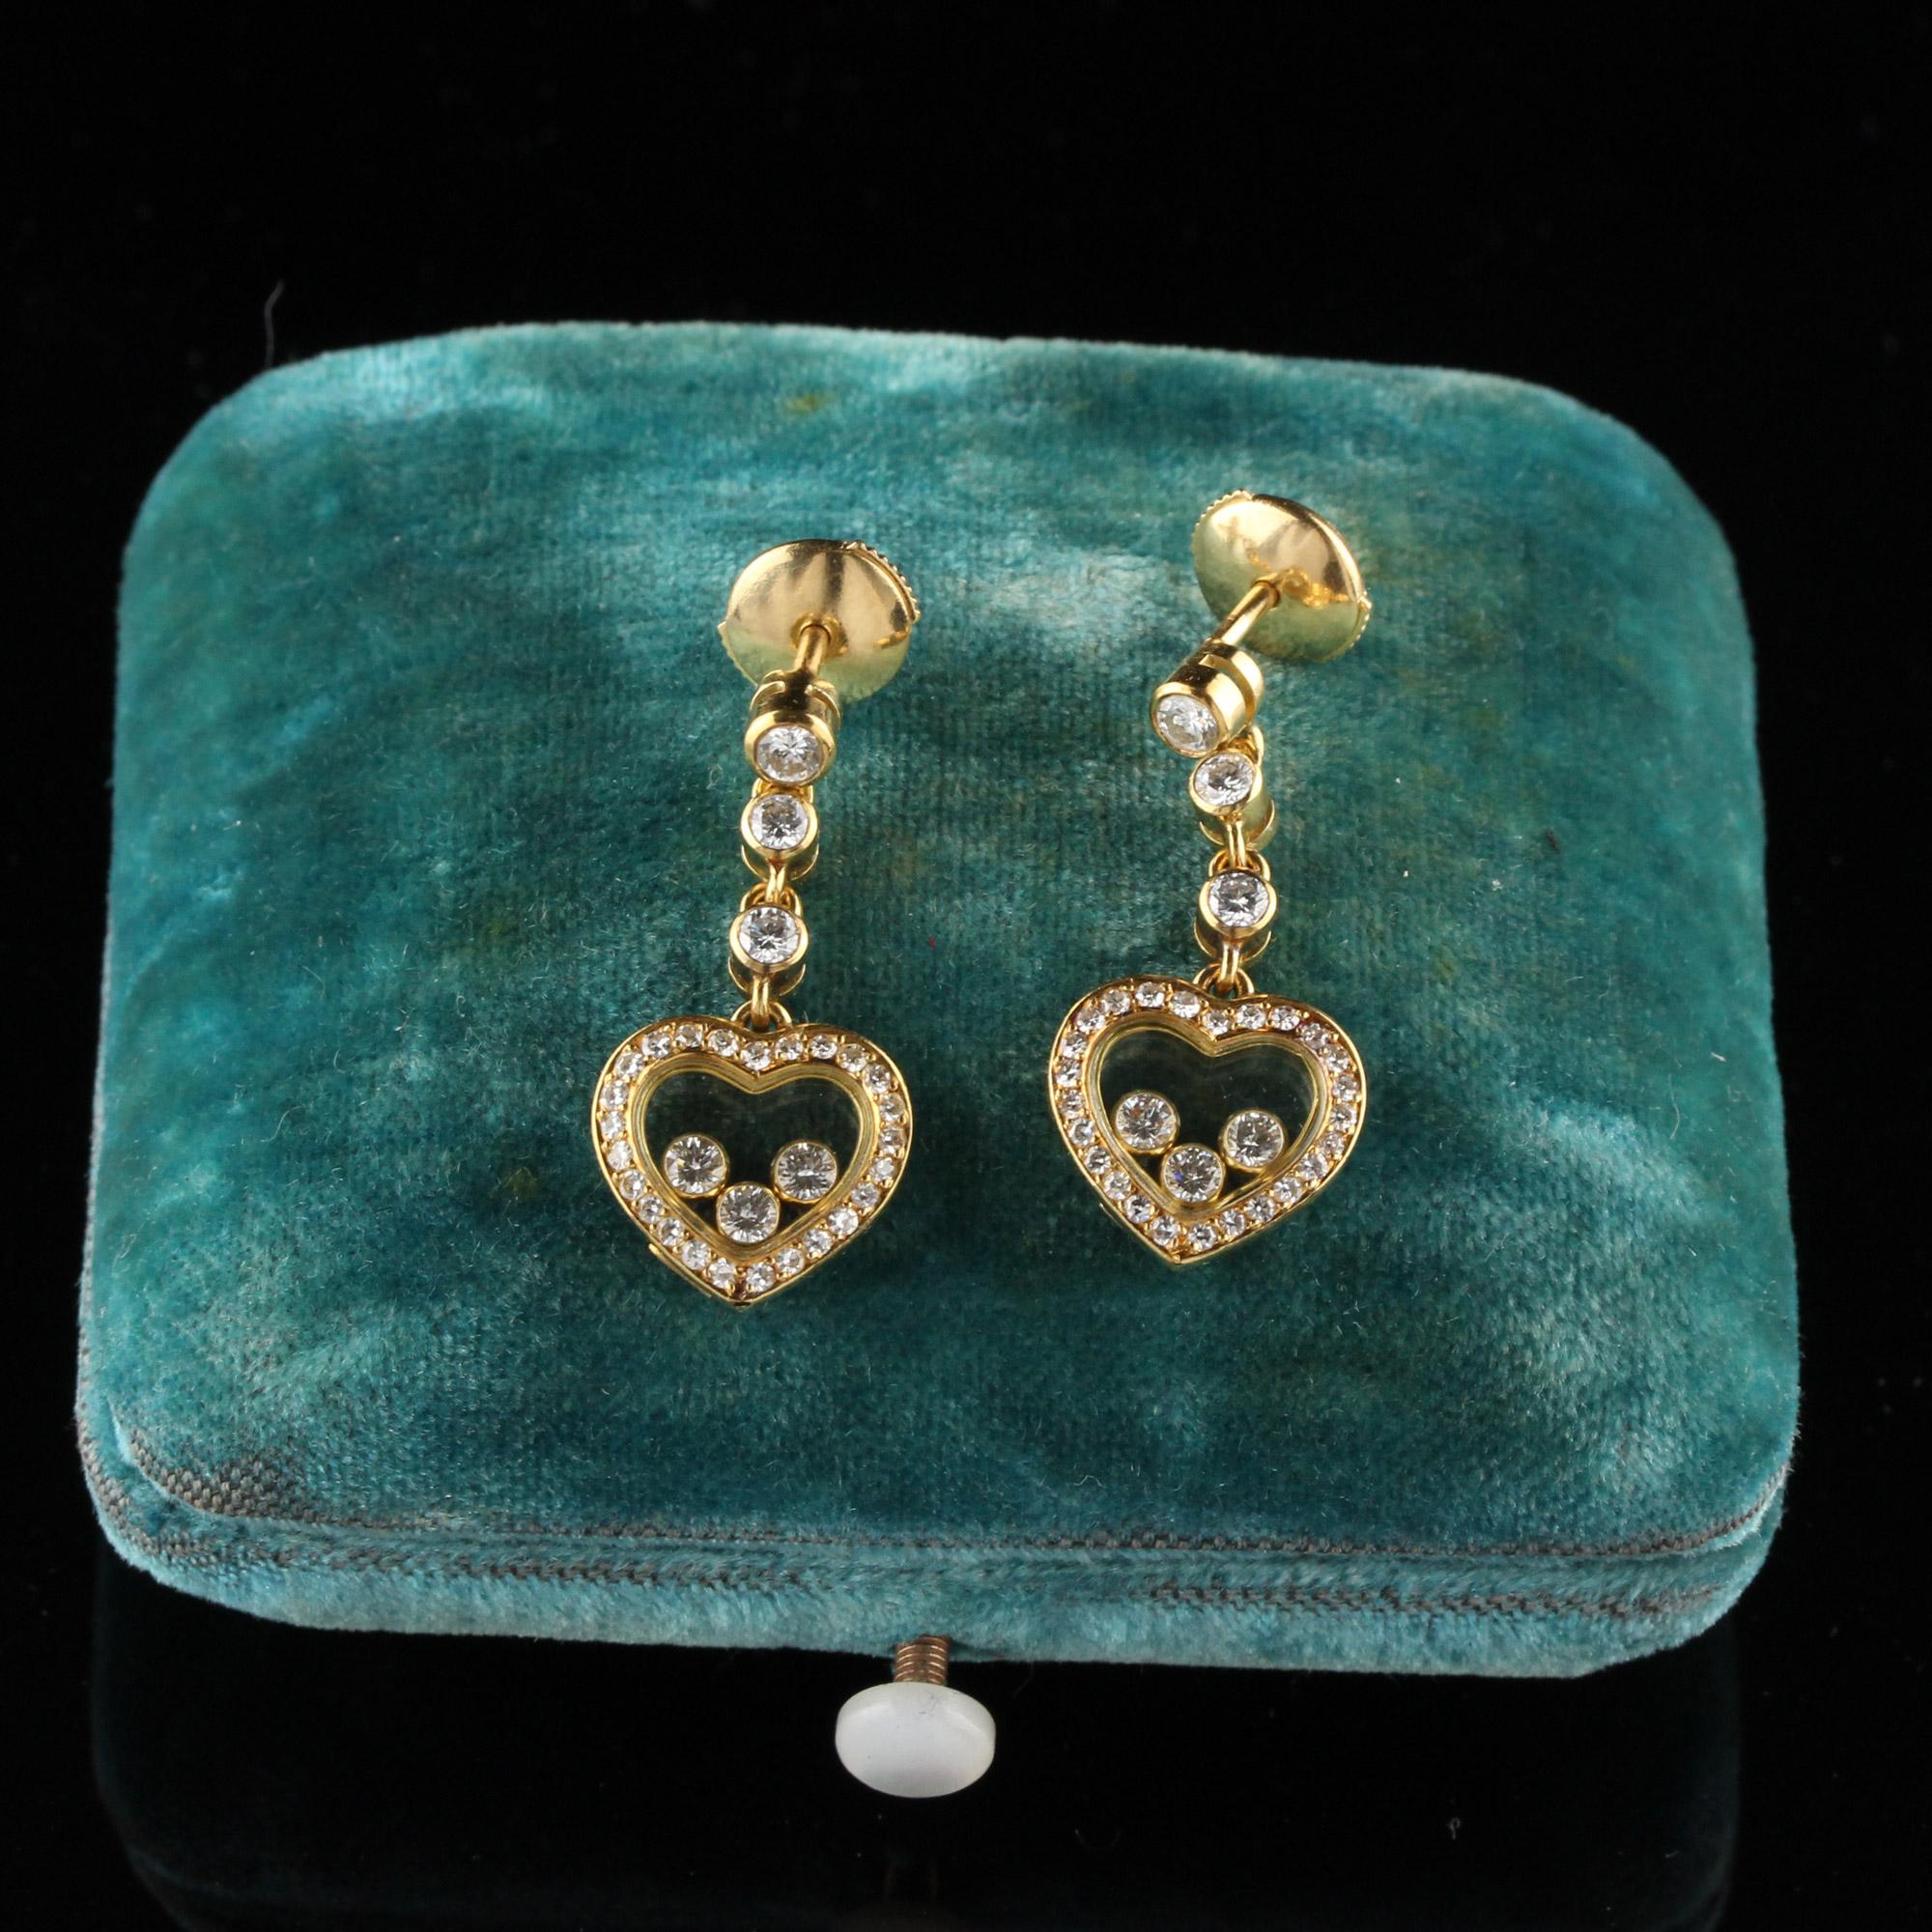 Beautiful Chopard Happy Heart drop earrings. Each heart earring contains 3 diamonds inside the heart. 

#E0008

Metal: 18K Yellow Gold

Weight: 6.8 Grams

Measurements: 11.9 x 10.7 mm

Drop Length: 25 mm